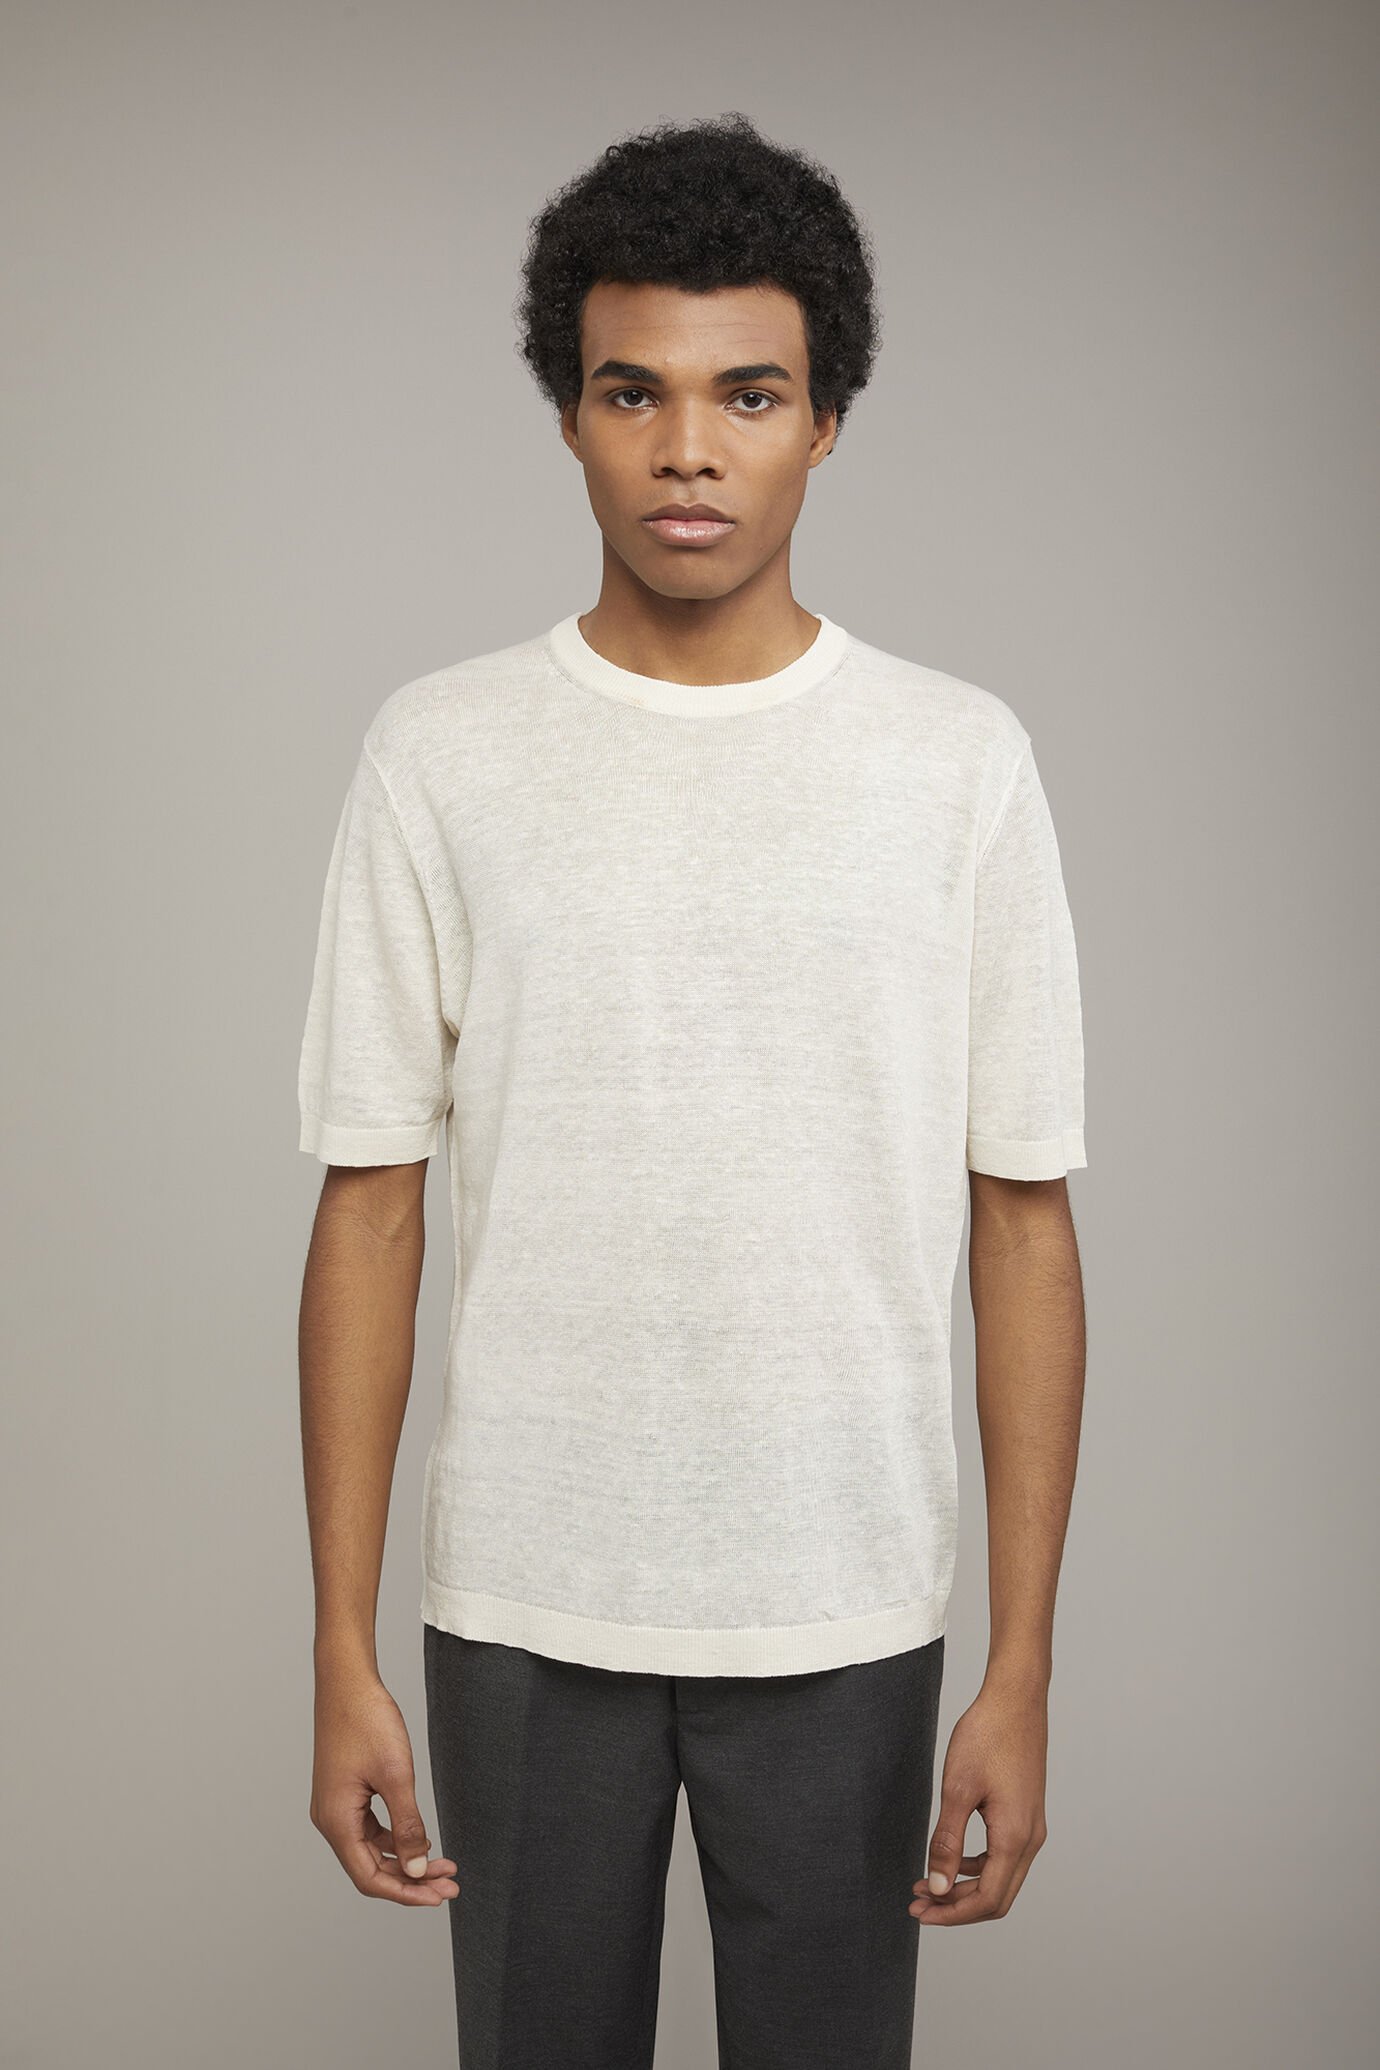 Men's knitted t-shirt 100% linen short-sleeved regular fit